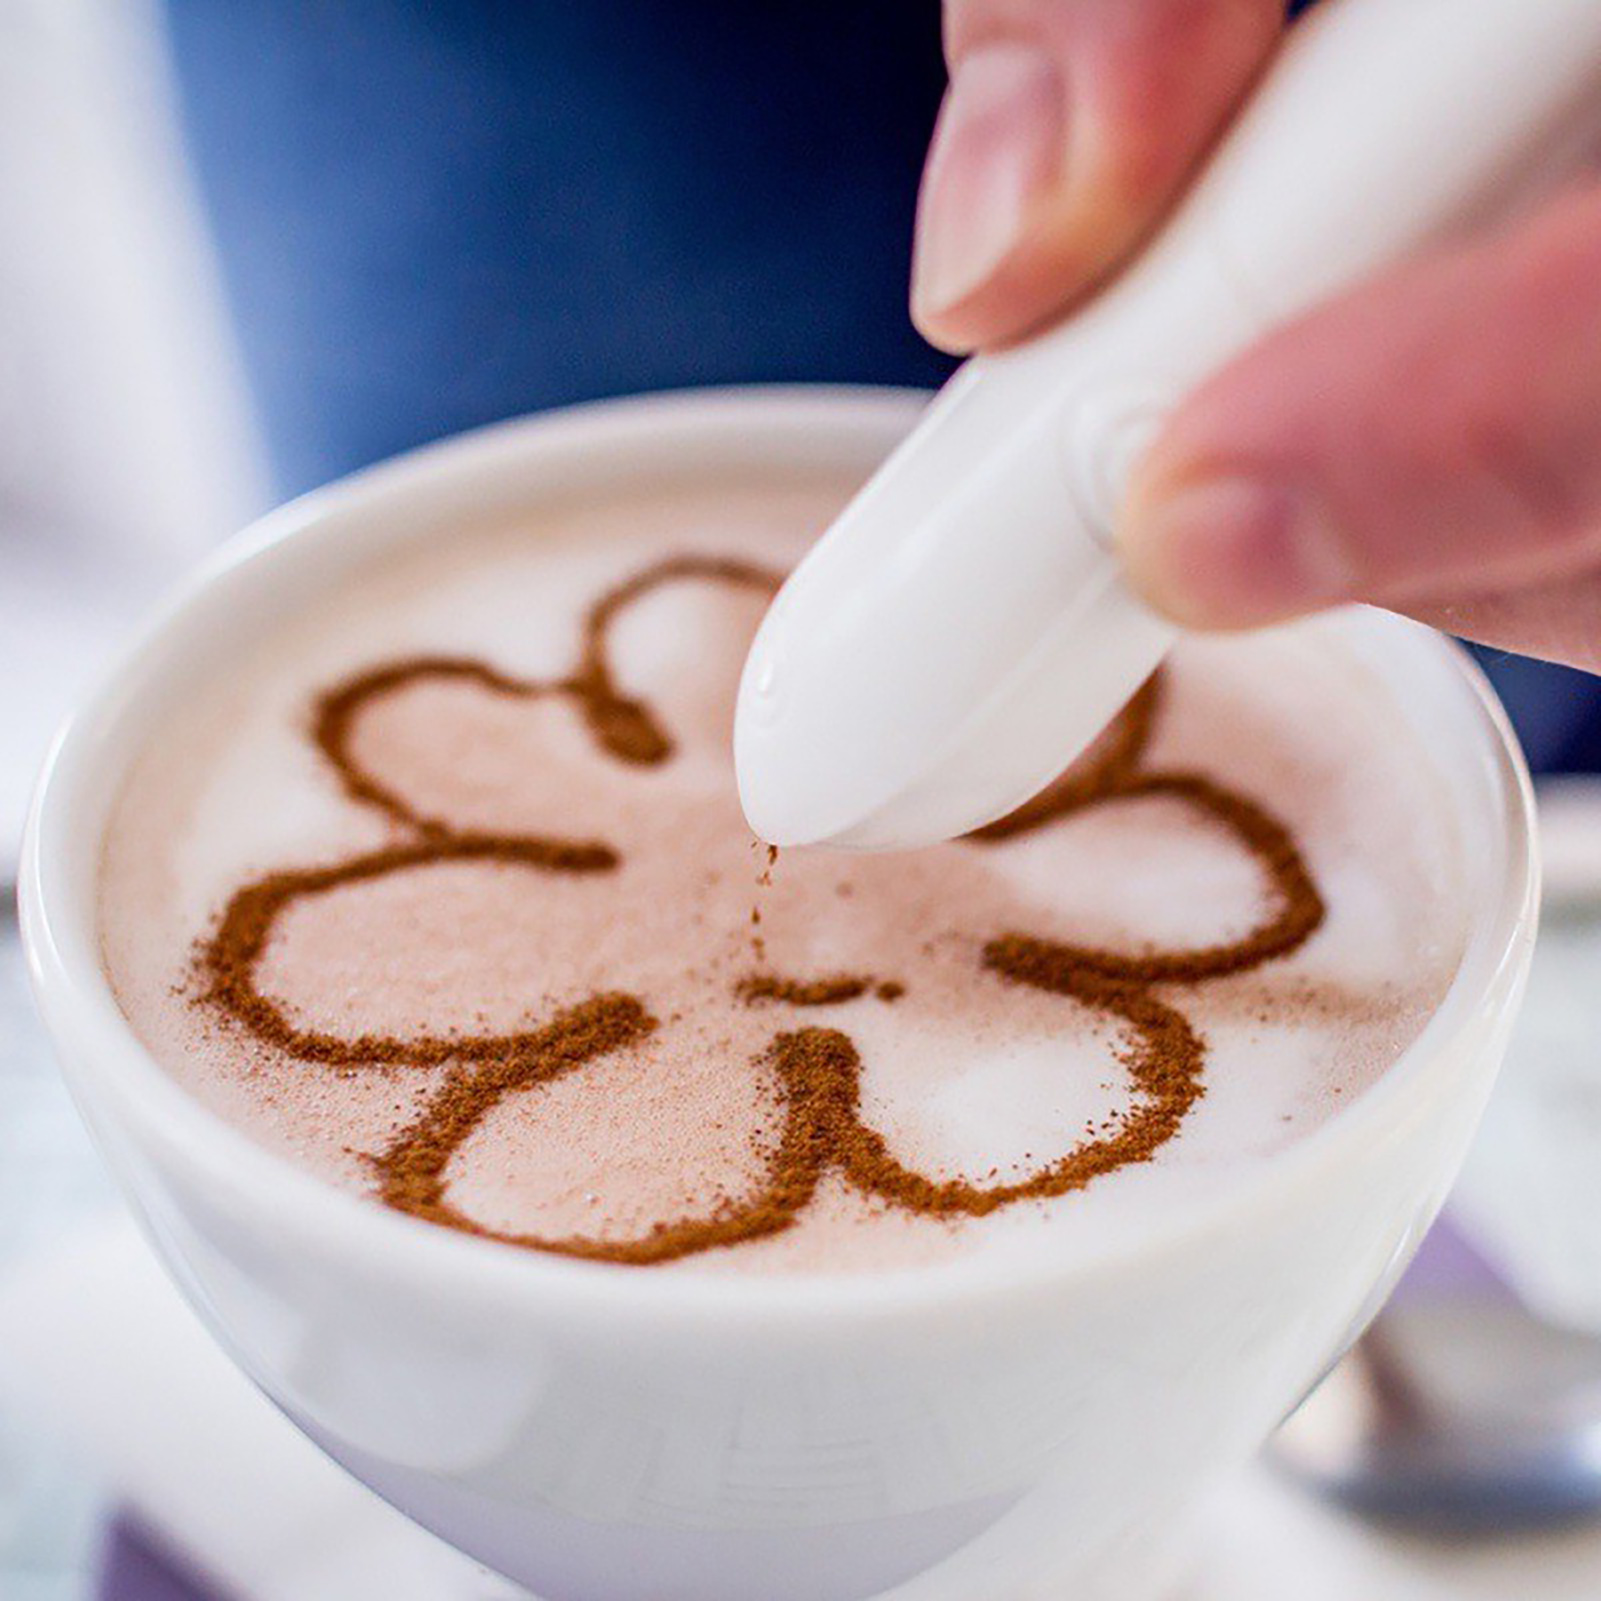 Pengpengfang 1 Pcs Latte Art Pen Easy-to-Use Wide Application DIY Tool  Electrical Coffee Art Carving Pen for Café 